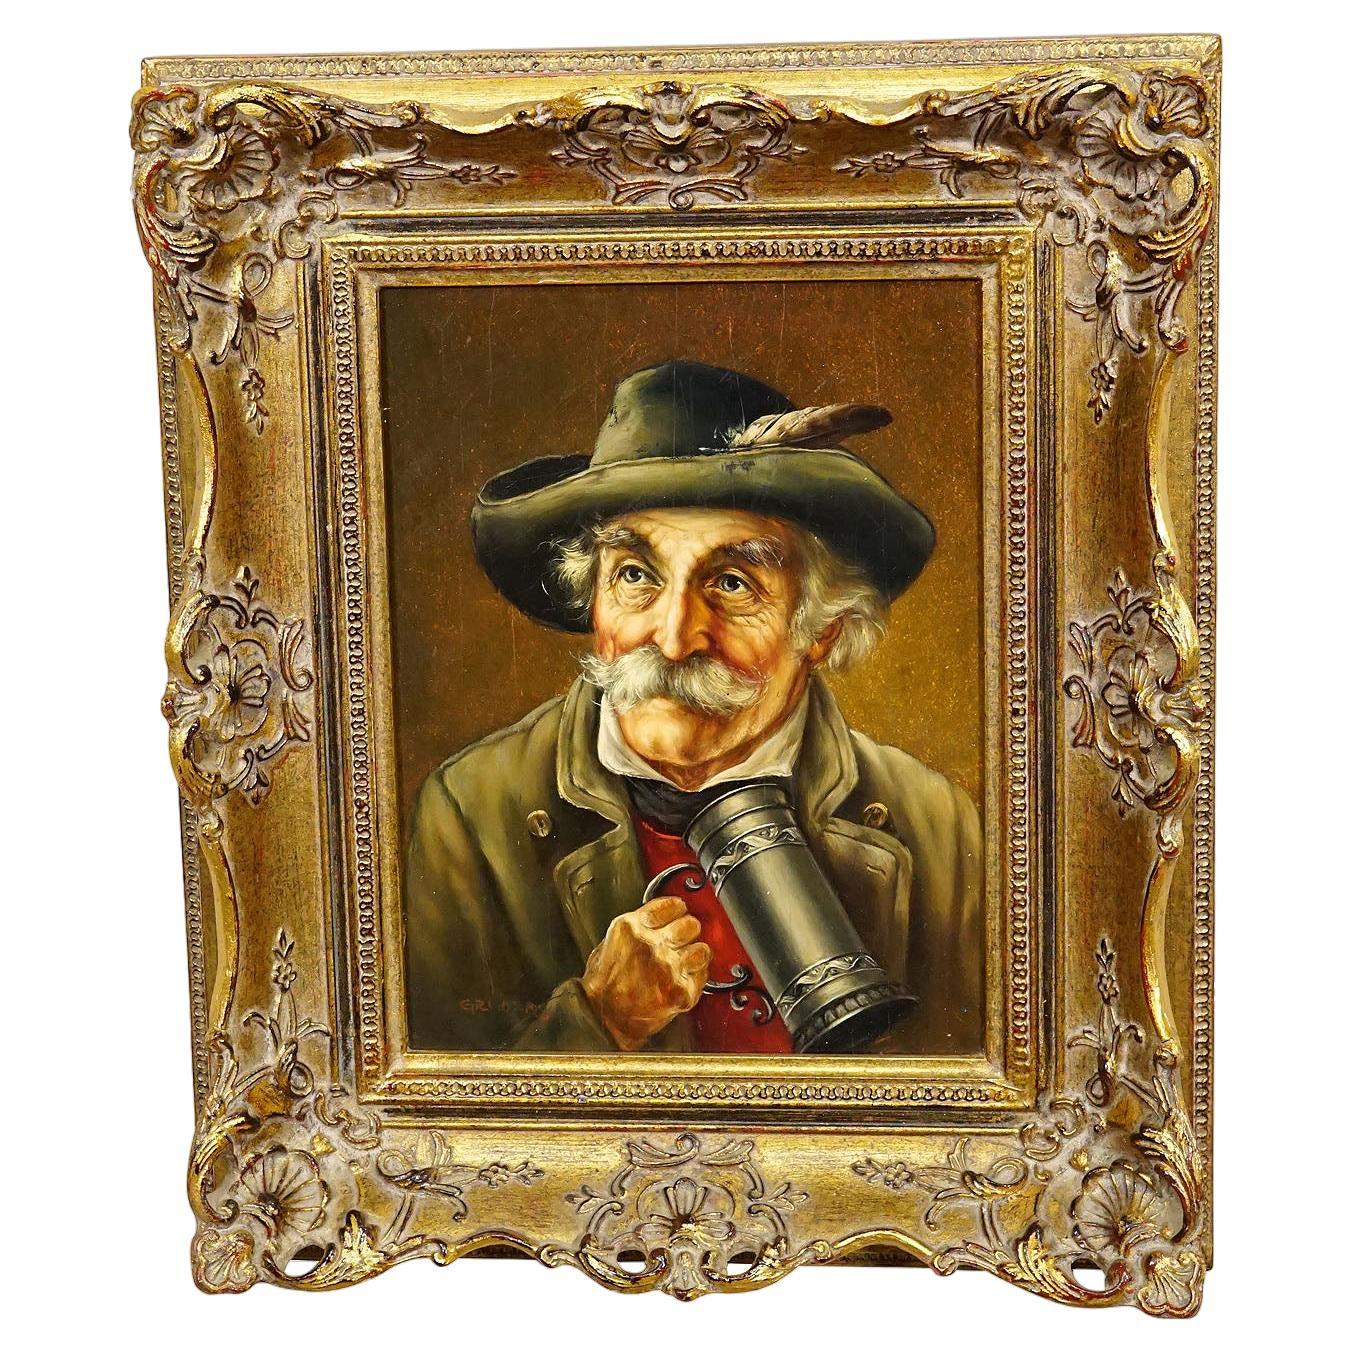 J. Gruber - Portrait of a Bavarian Folksy Man with Beer Mug, Oil on Wood For Sale